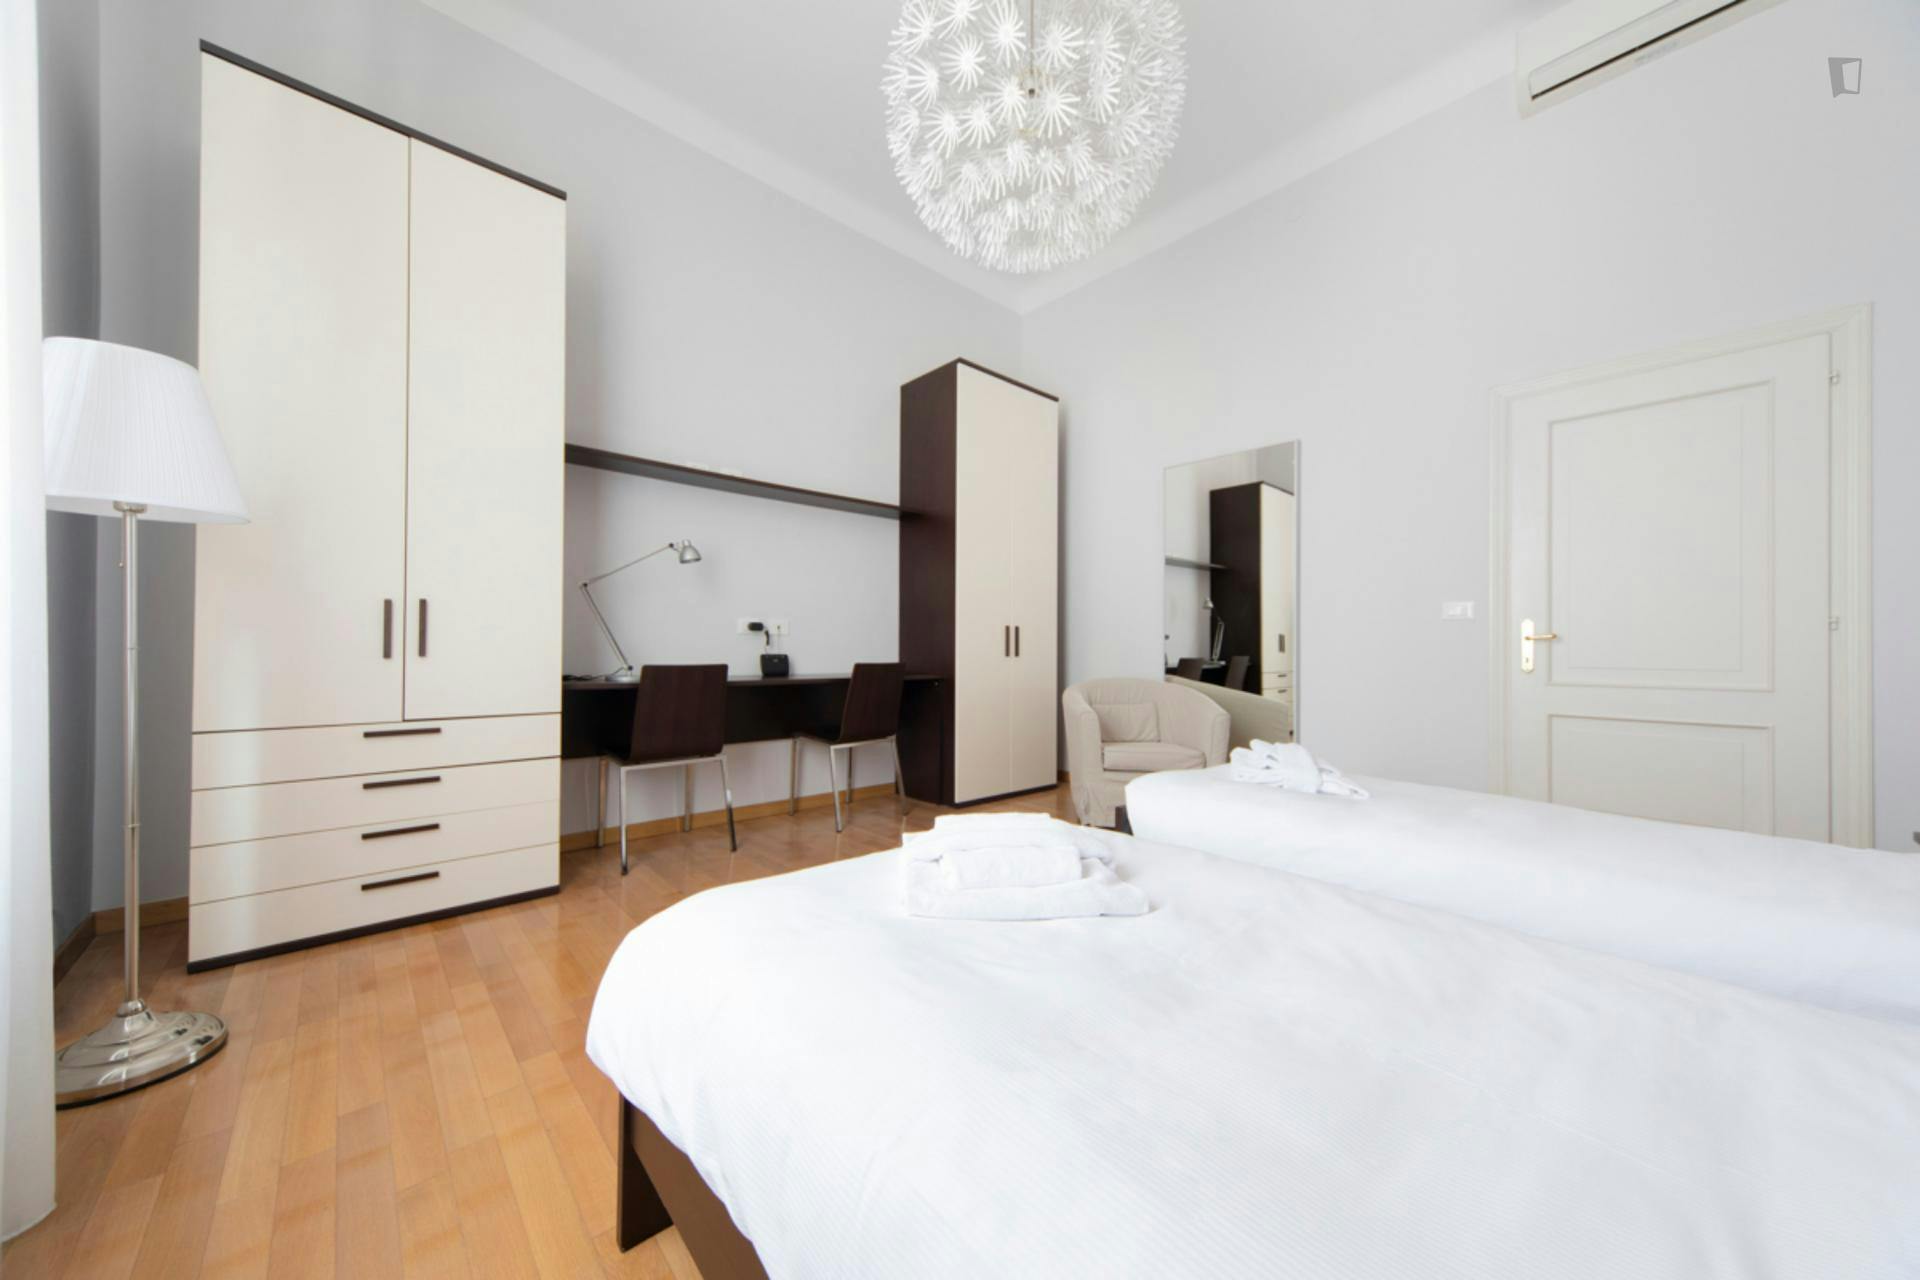 1-Bedroom apartment near Parco del Cavaticcio